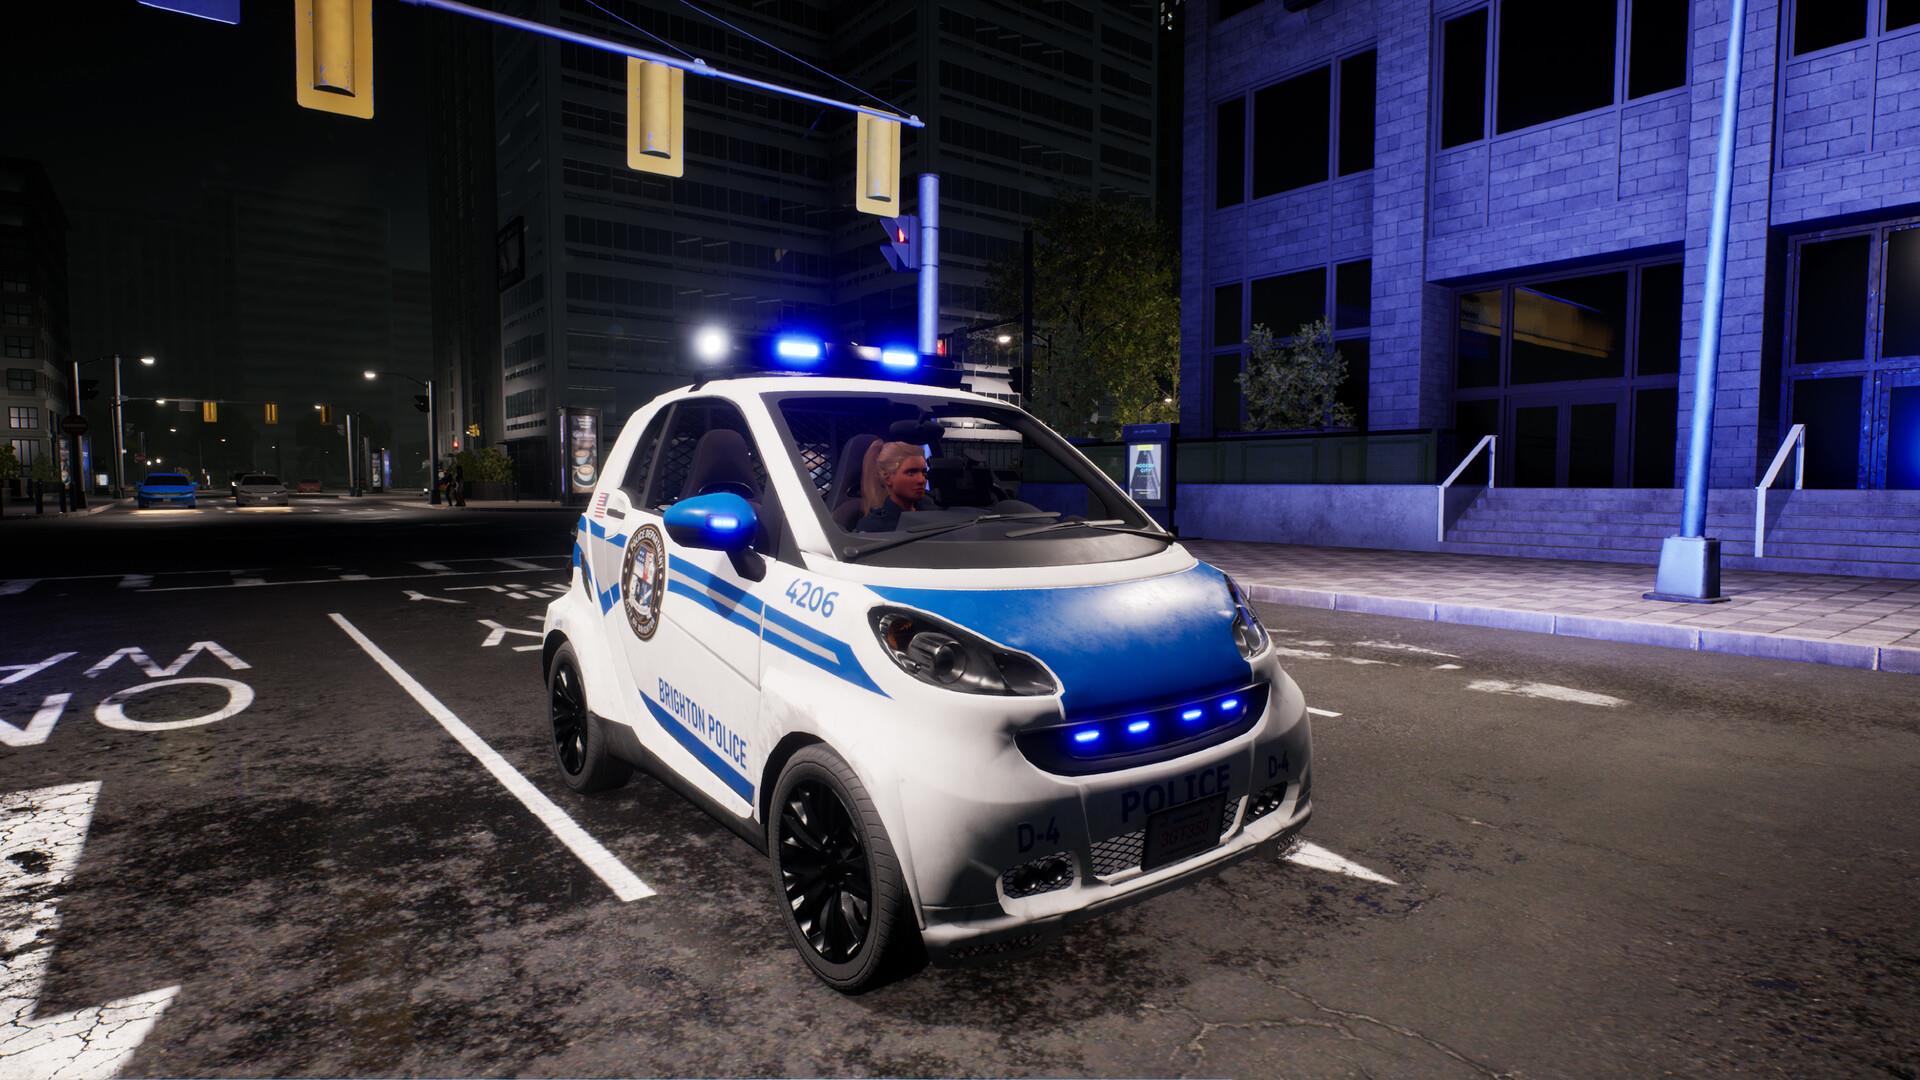 Police Simulator: Patrol Officers keeps getting better, new DLC released  Article - Gaming Nexus